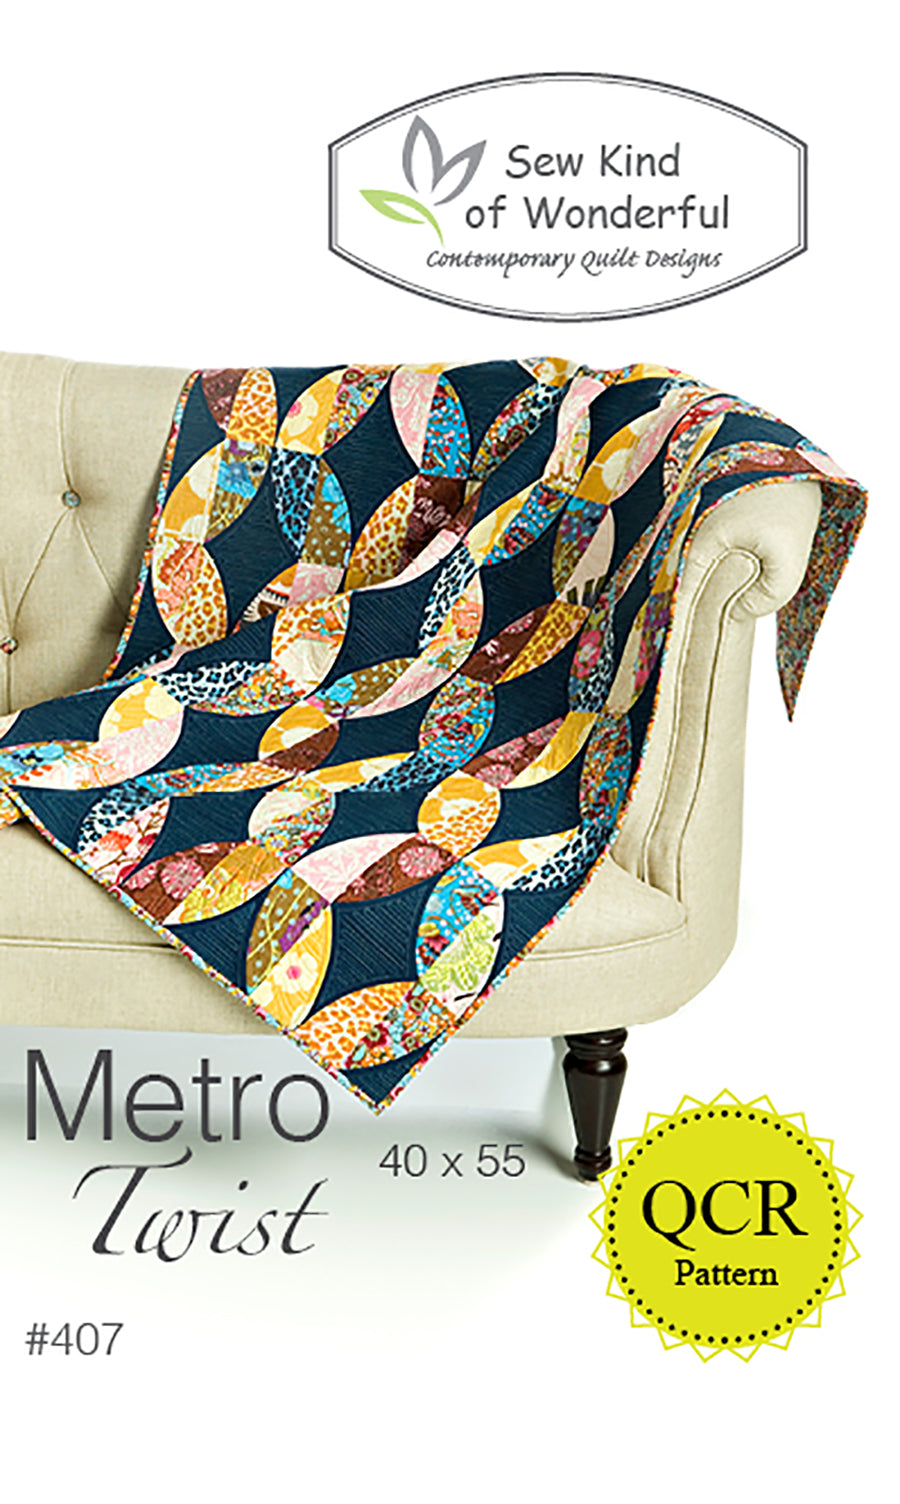 Metro Twist Quilt Pattern by Jenny Pedigo of Sew Kind of Wonderful